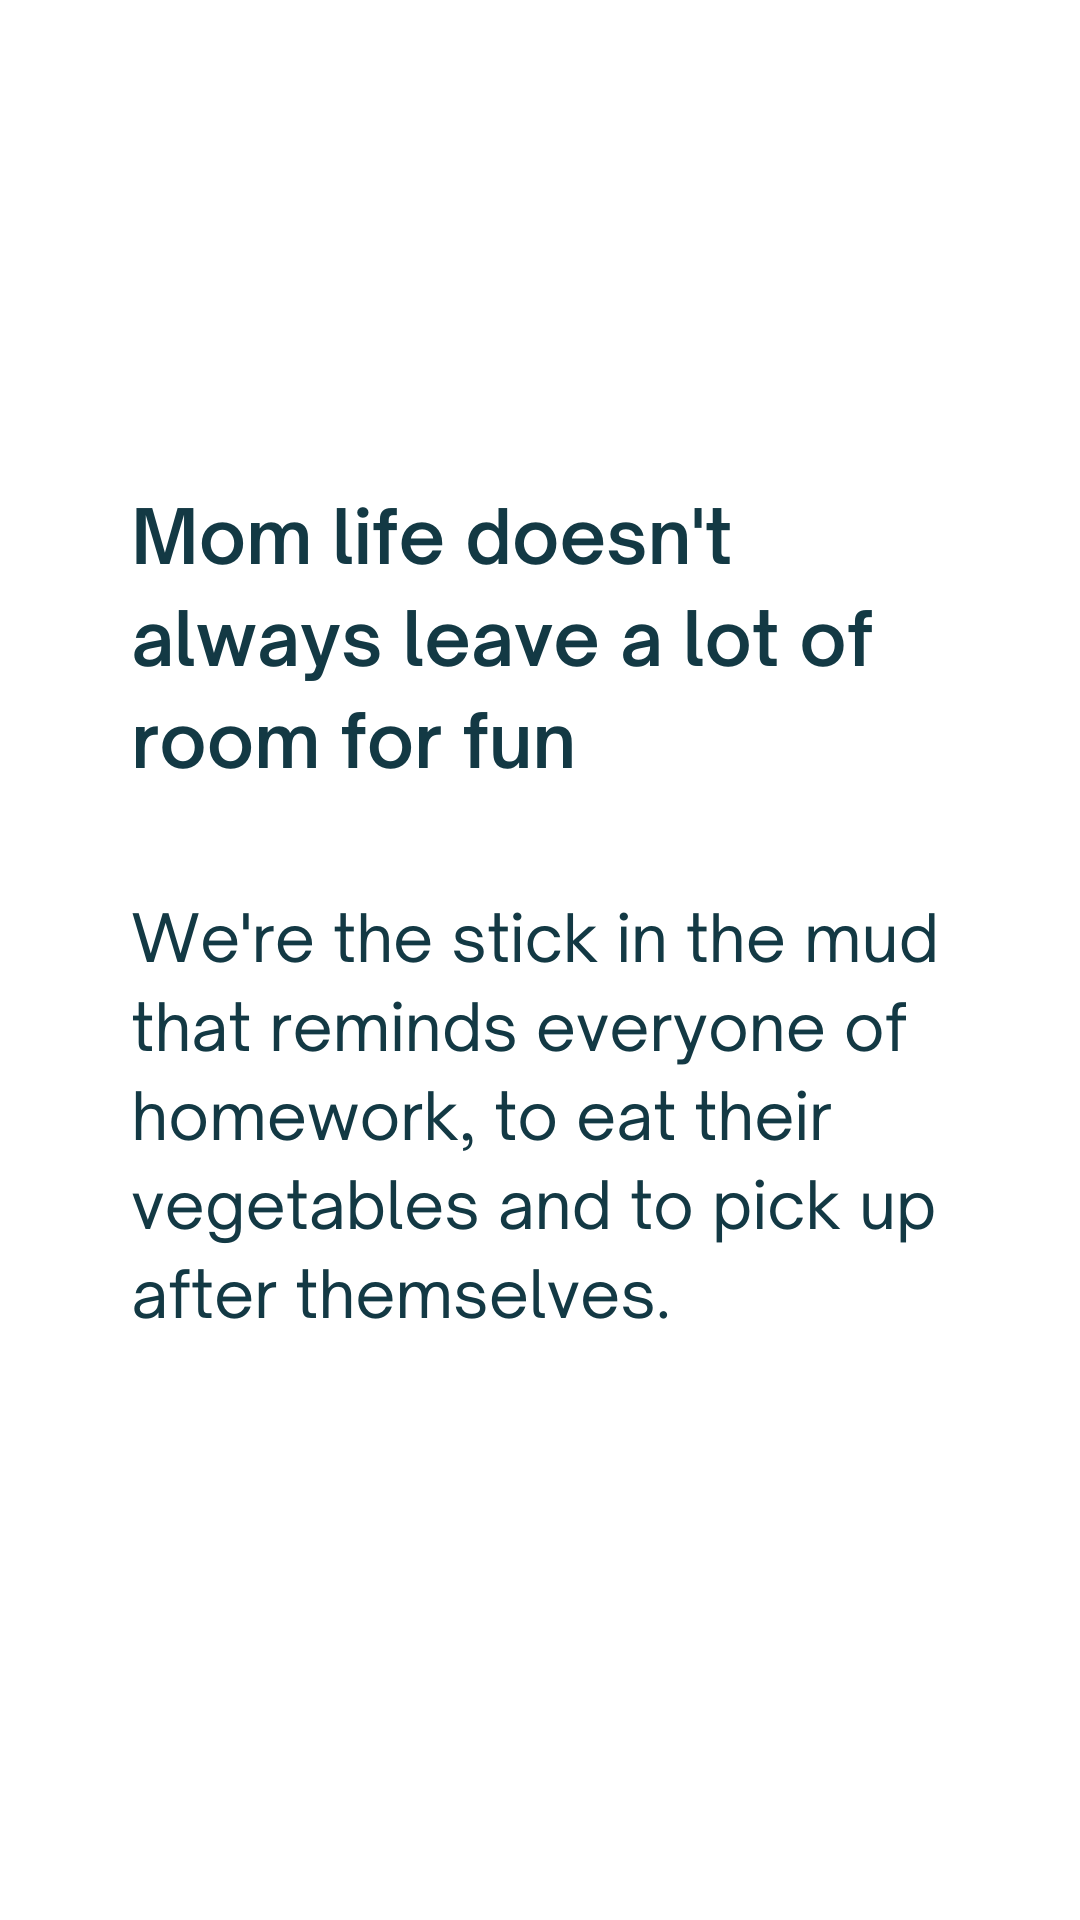 Mom life struggles